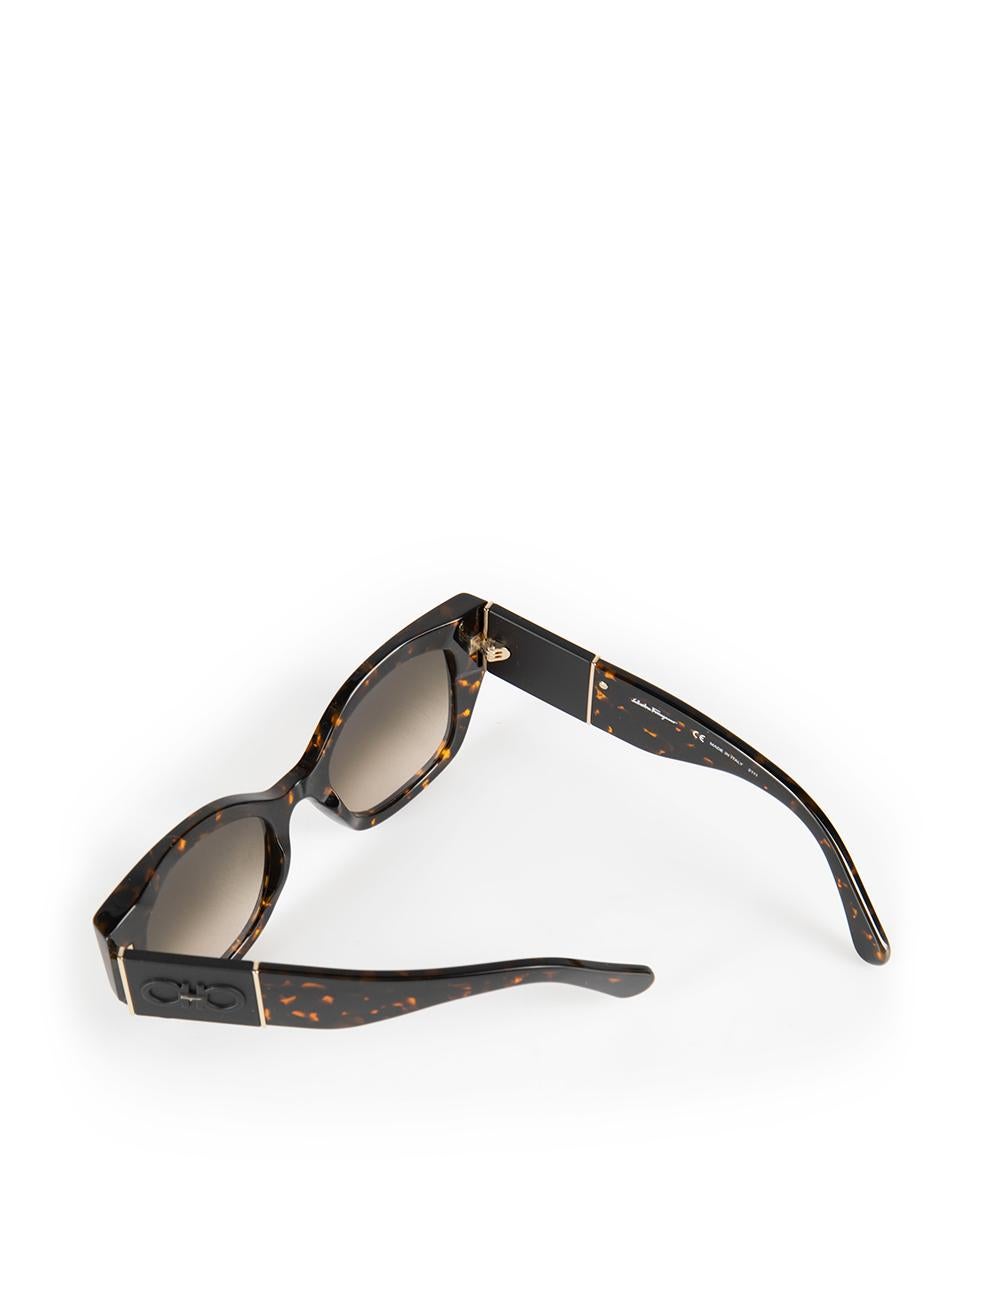 Salvatore Ferragamo Vintage Tortoise Square Sunglasses For Sale 2